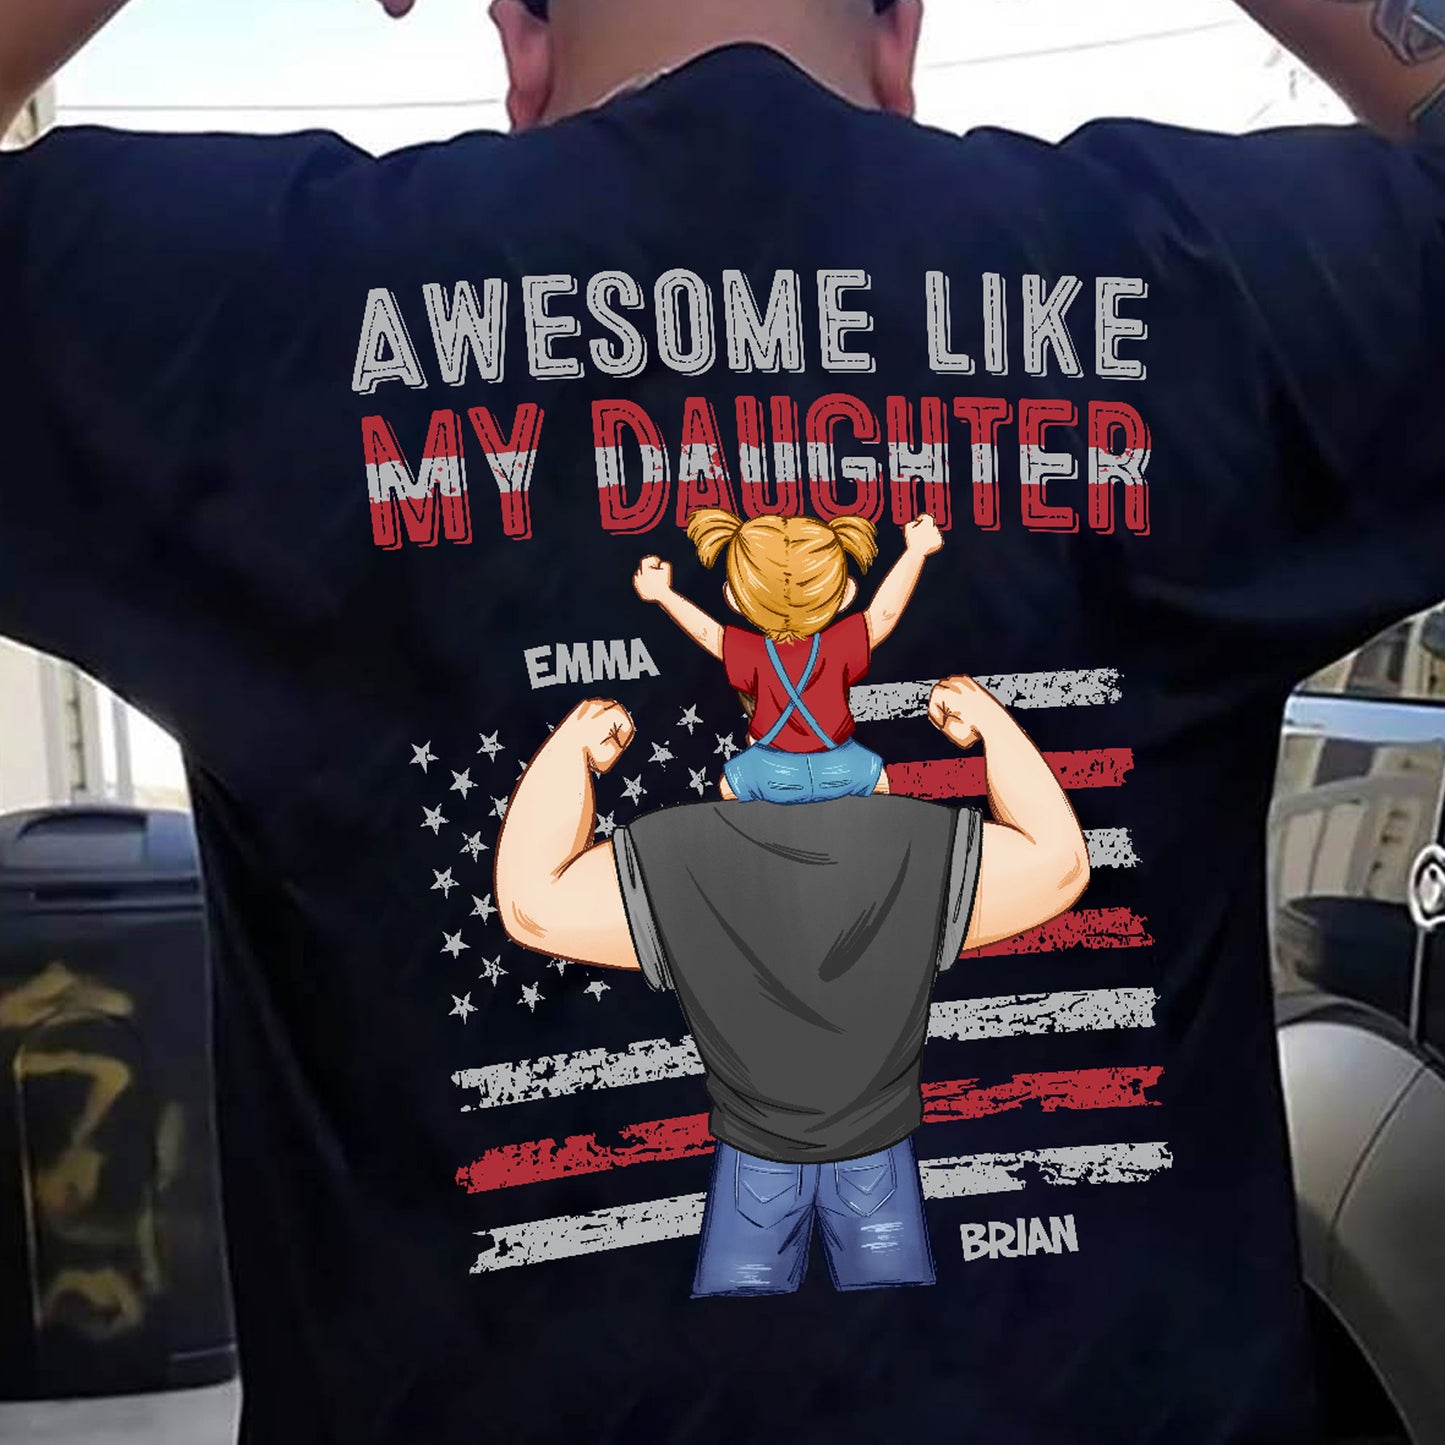 Awesome Like Mine - Personalized Back Printed Family Matching Shirts